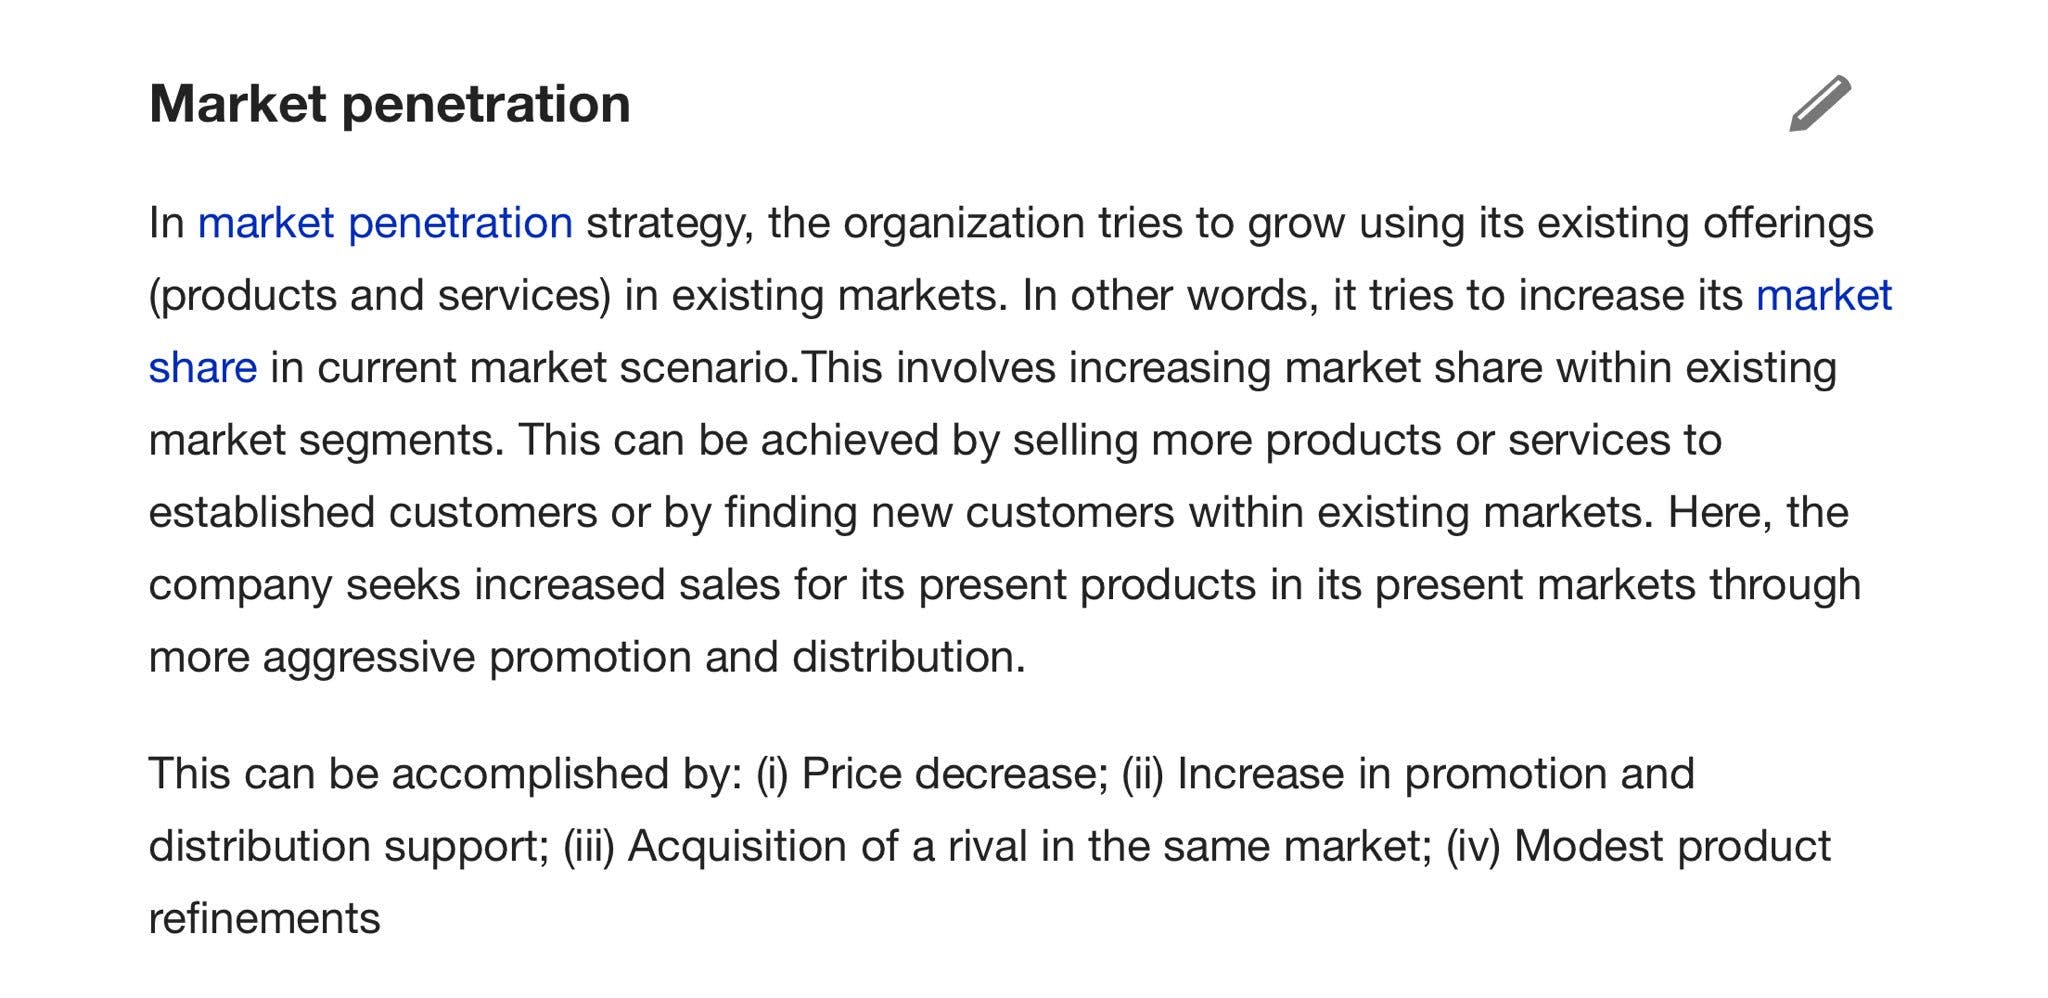 Market penetration